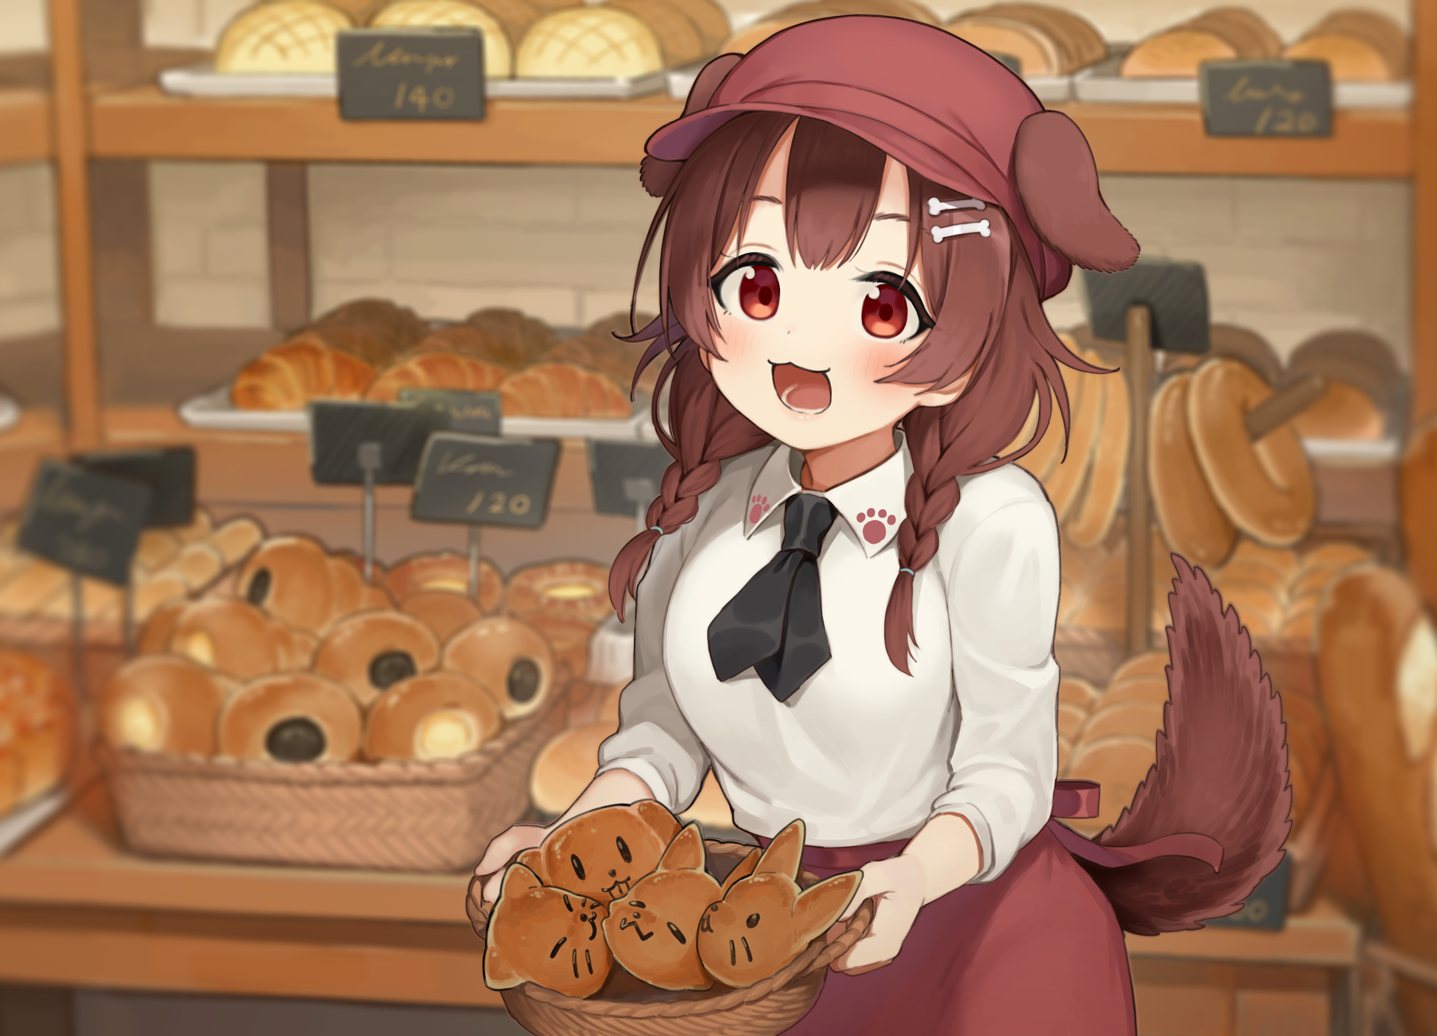 Cute Baking Anime Girl Clip Art Set – Daily Art Hub // Graphics, Alphabets  & SVG